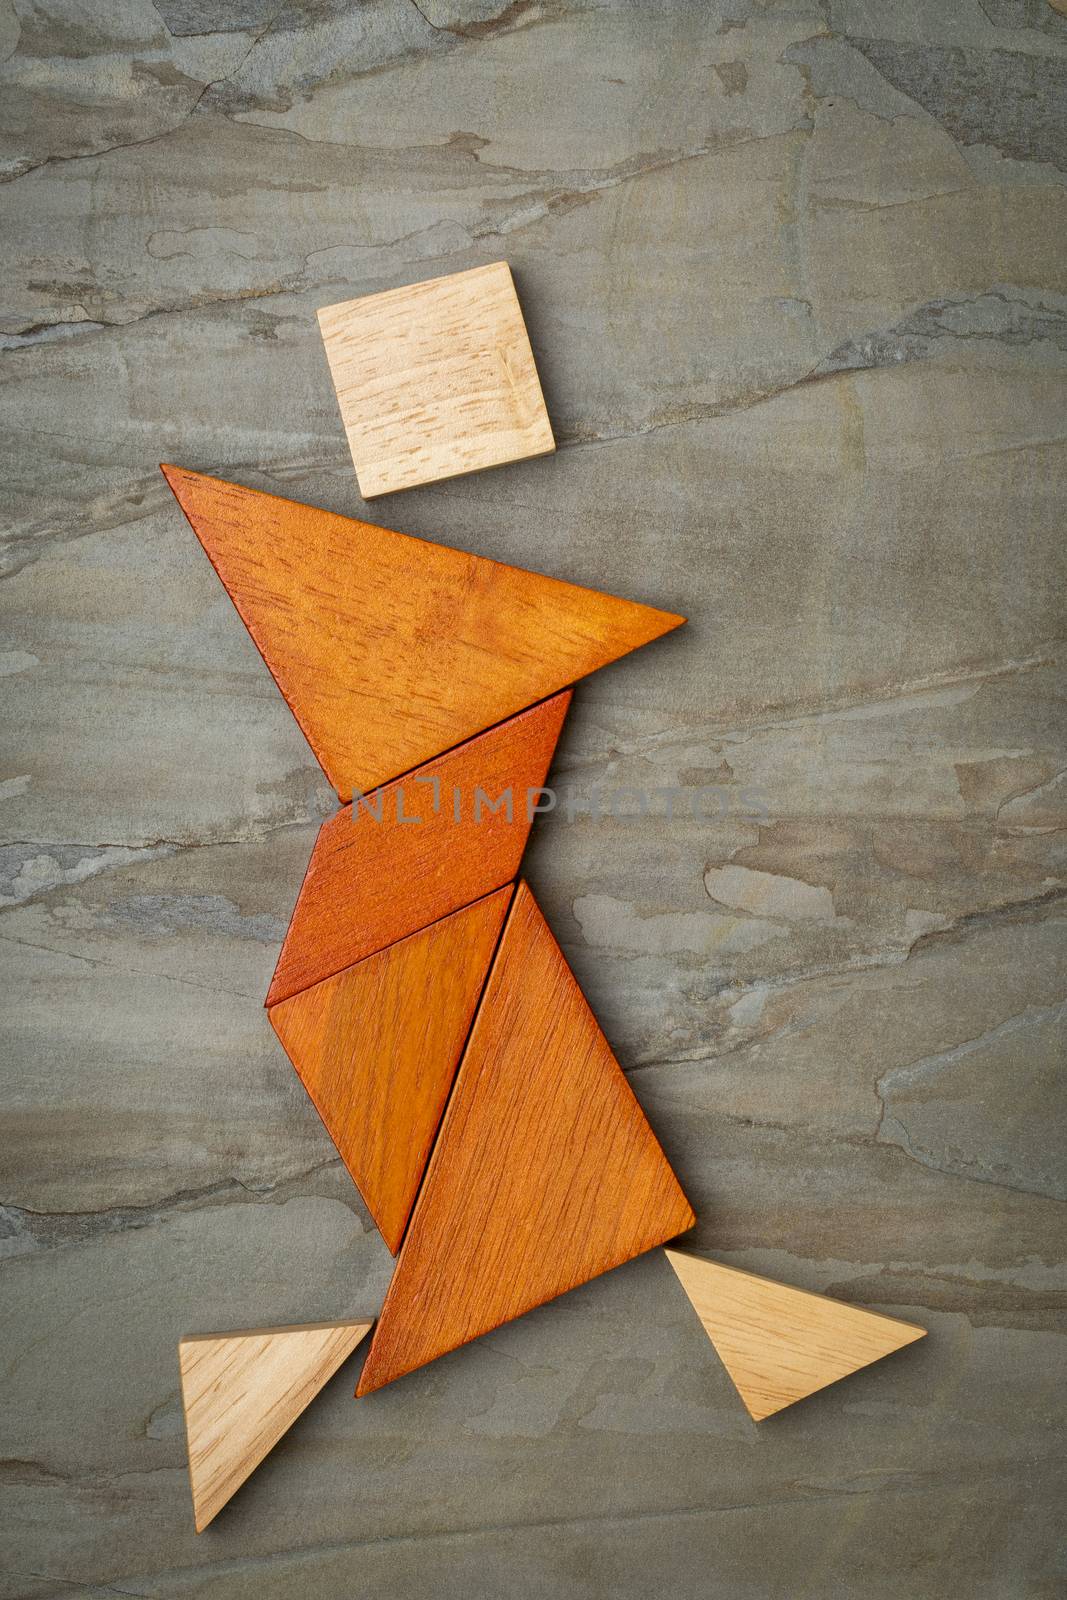 tangram dancer figure by PixelsAway